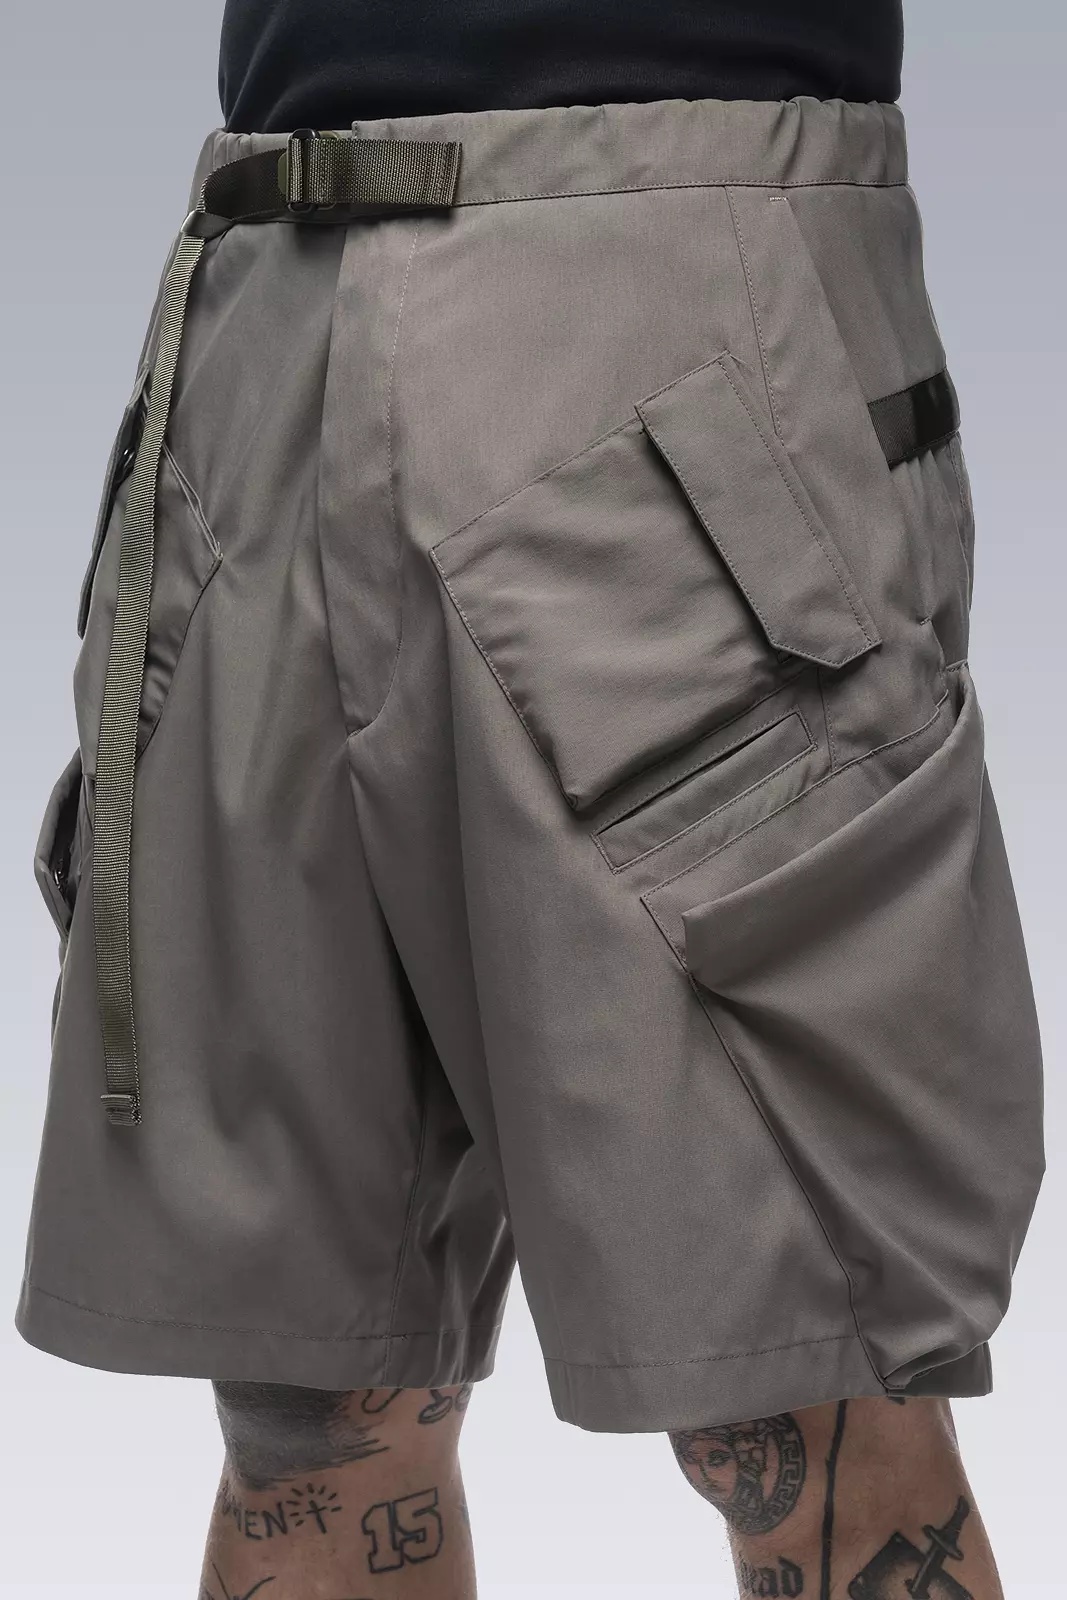 SP29-M Nylon Stretch BDU Short Pant Gray - 10